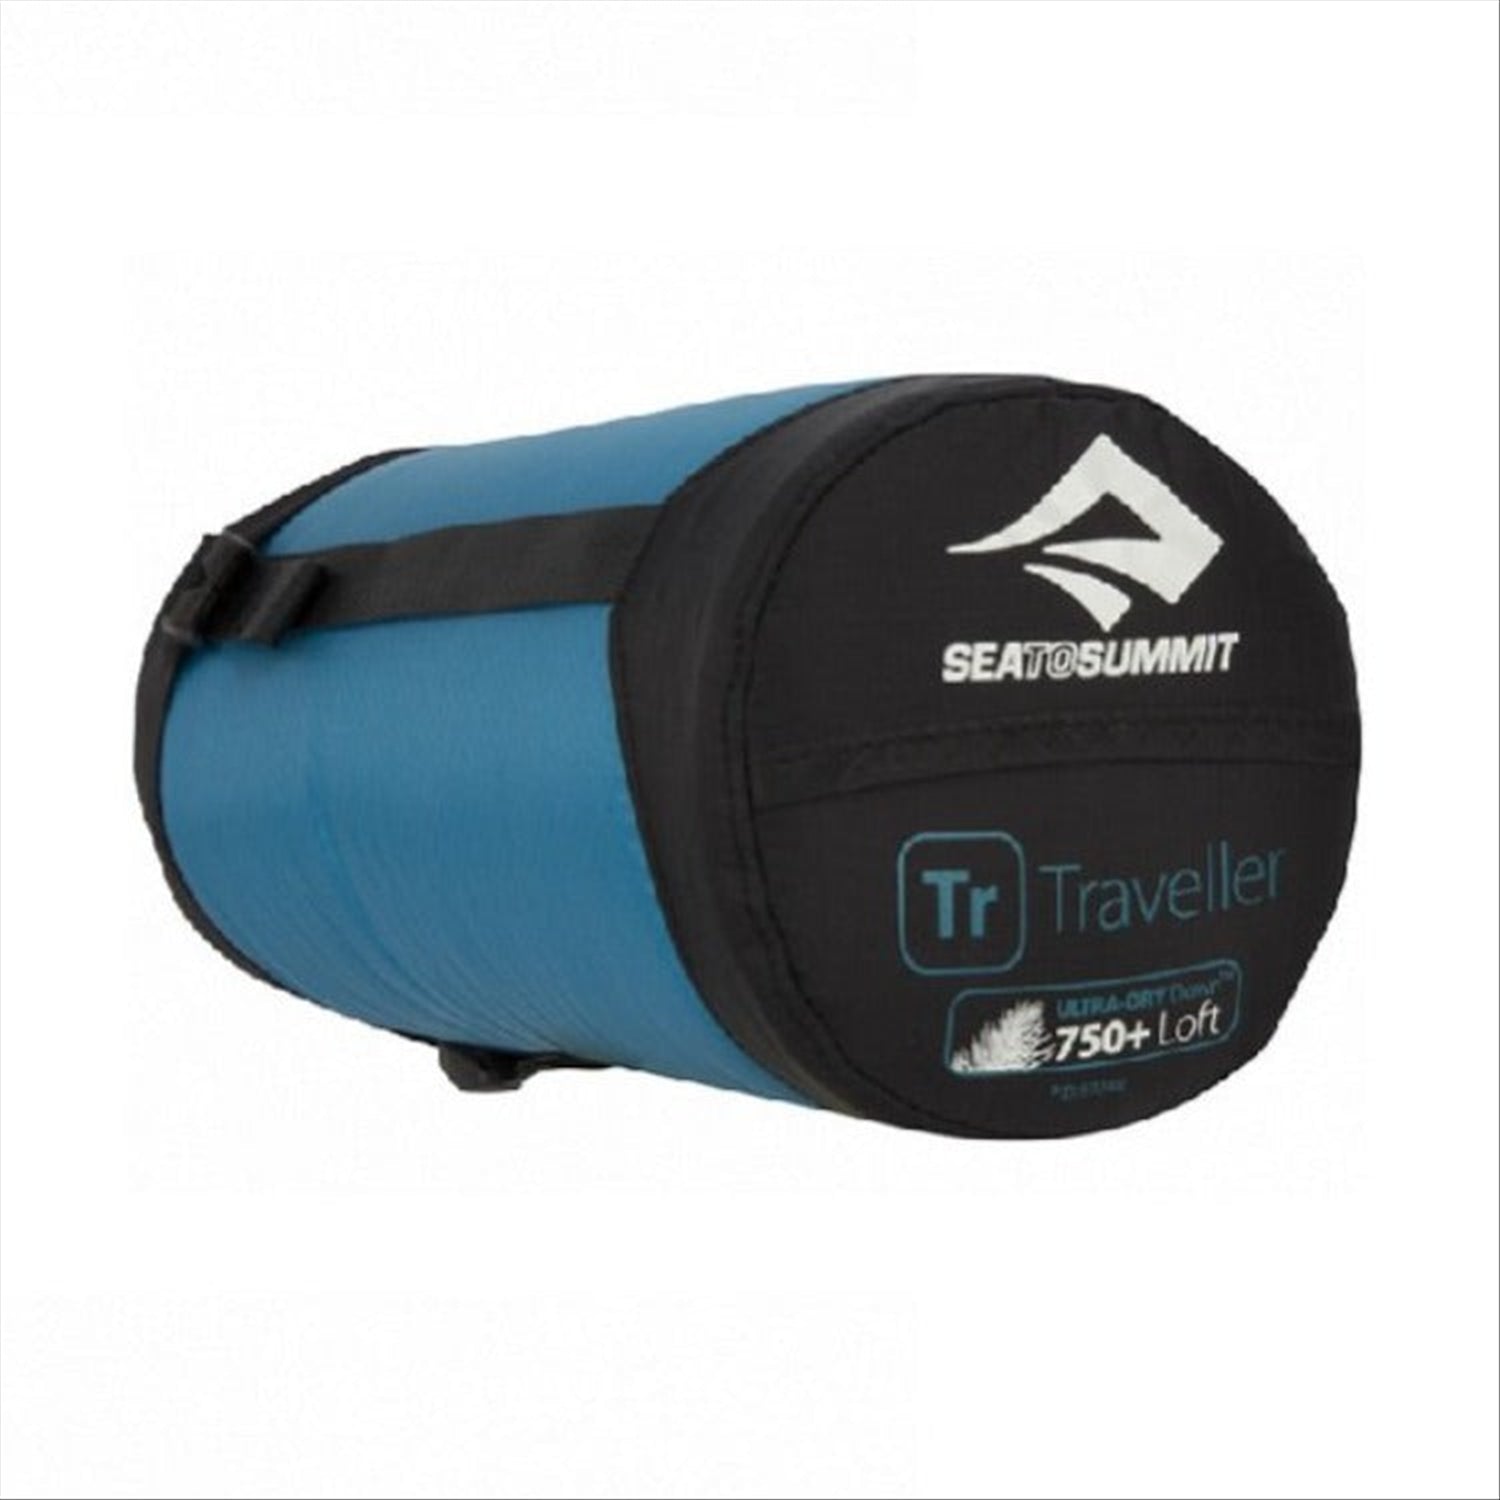 Sea to Summit Sea to Summit Traveller TRI Ultra Dry Down Sleeping Bag, Reg 420g, Long 500g